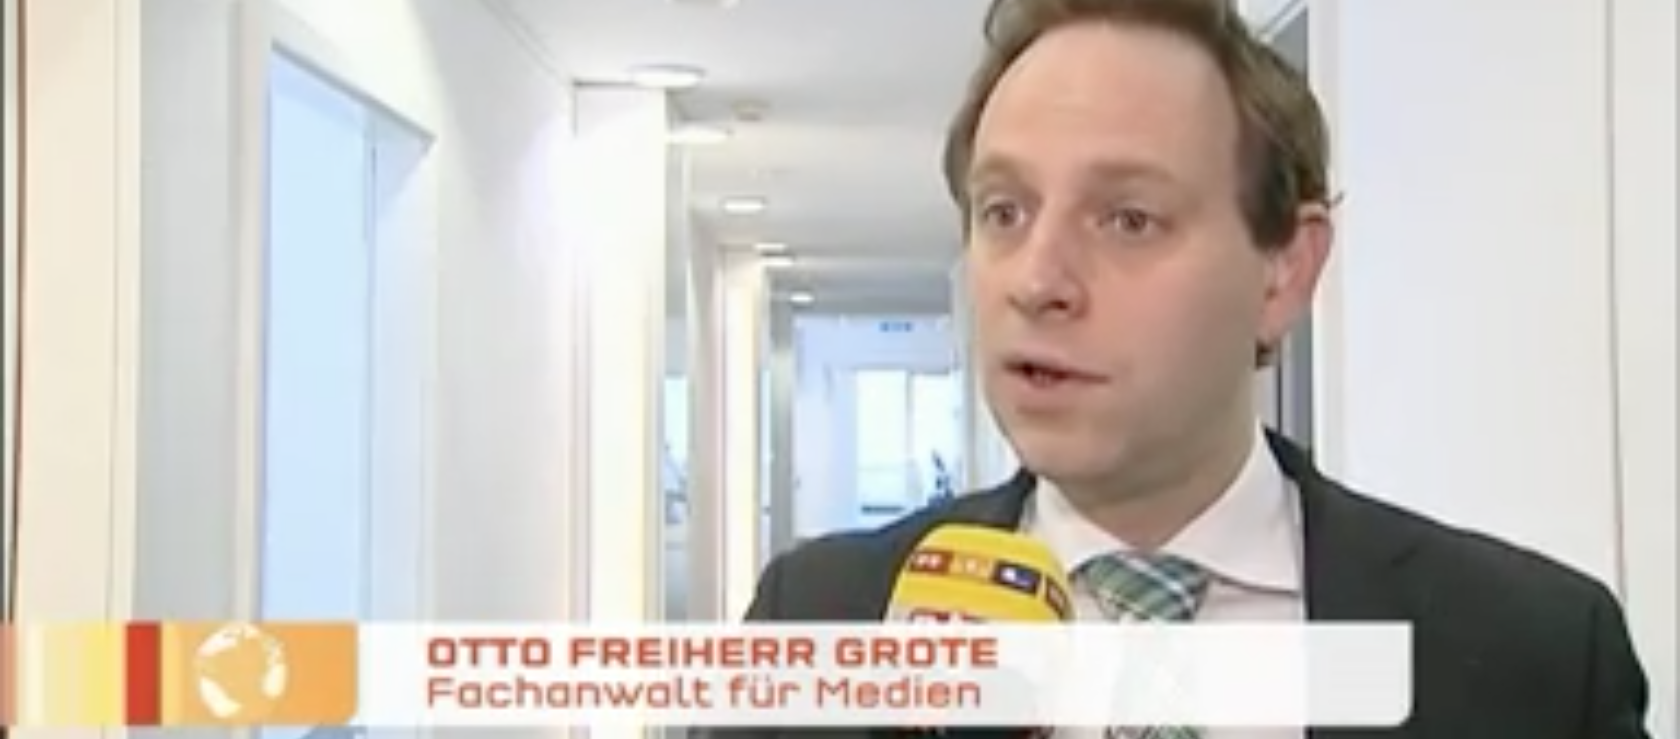 Rechtsanwalt Otto Freiherr Grote